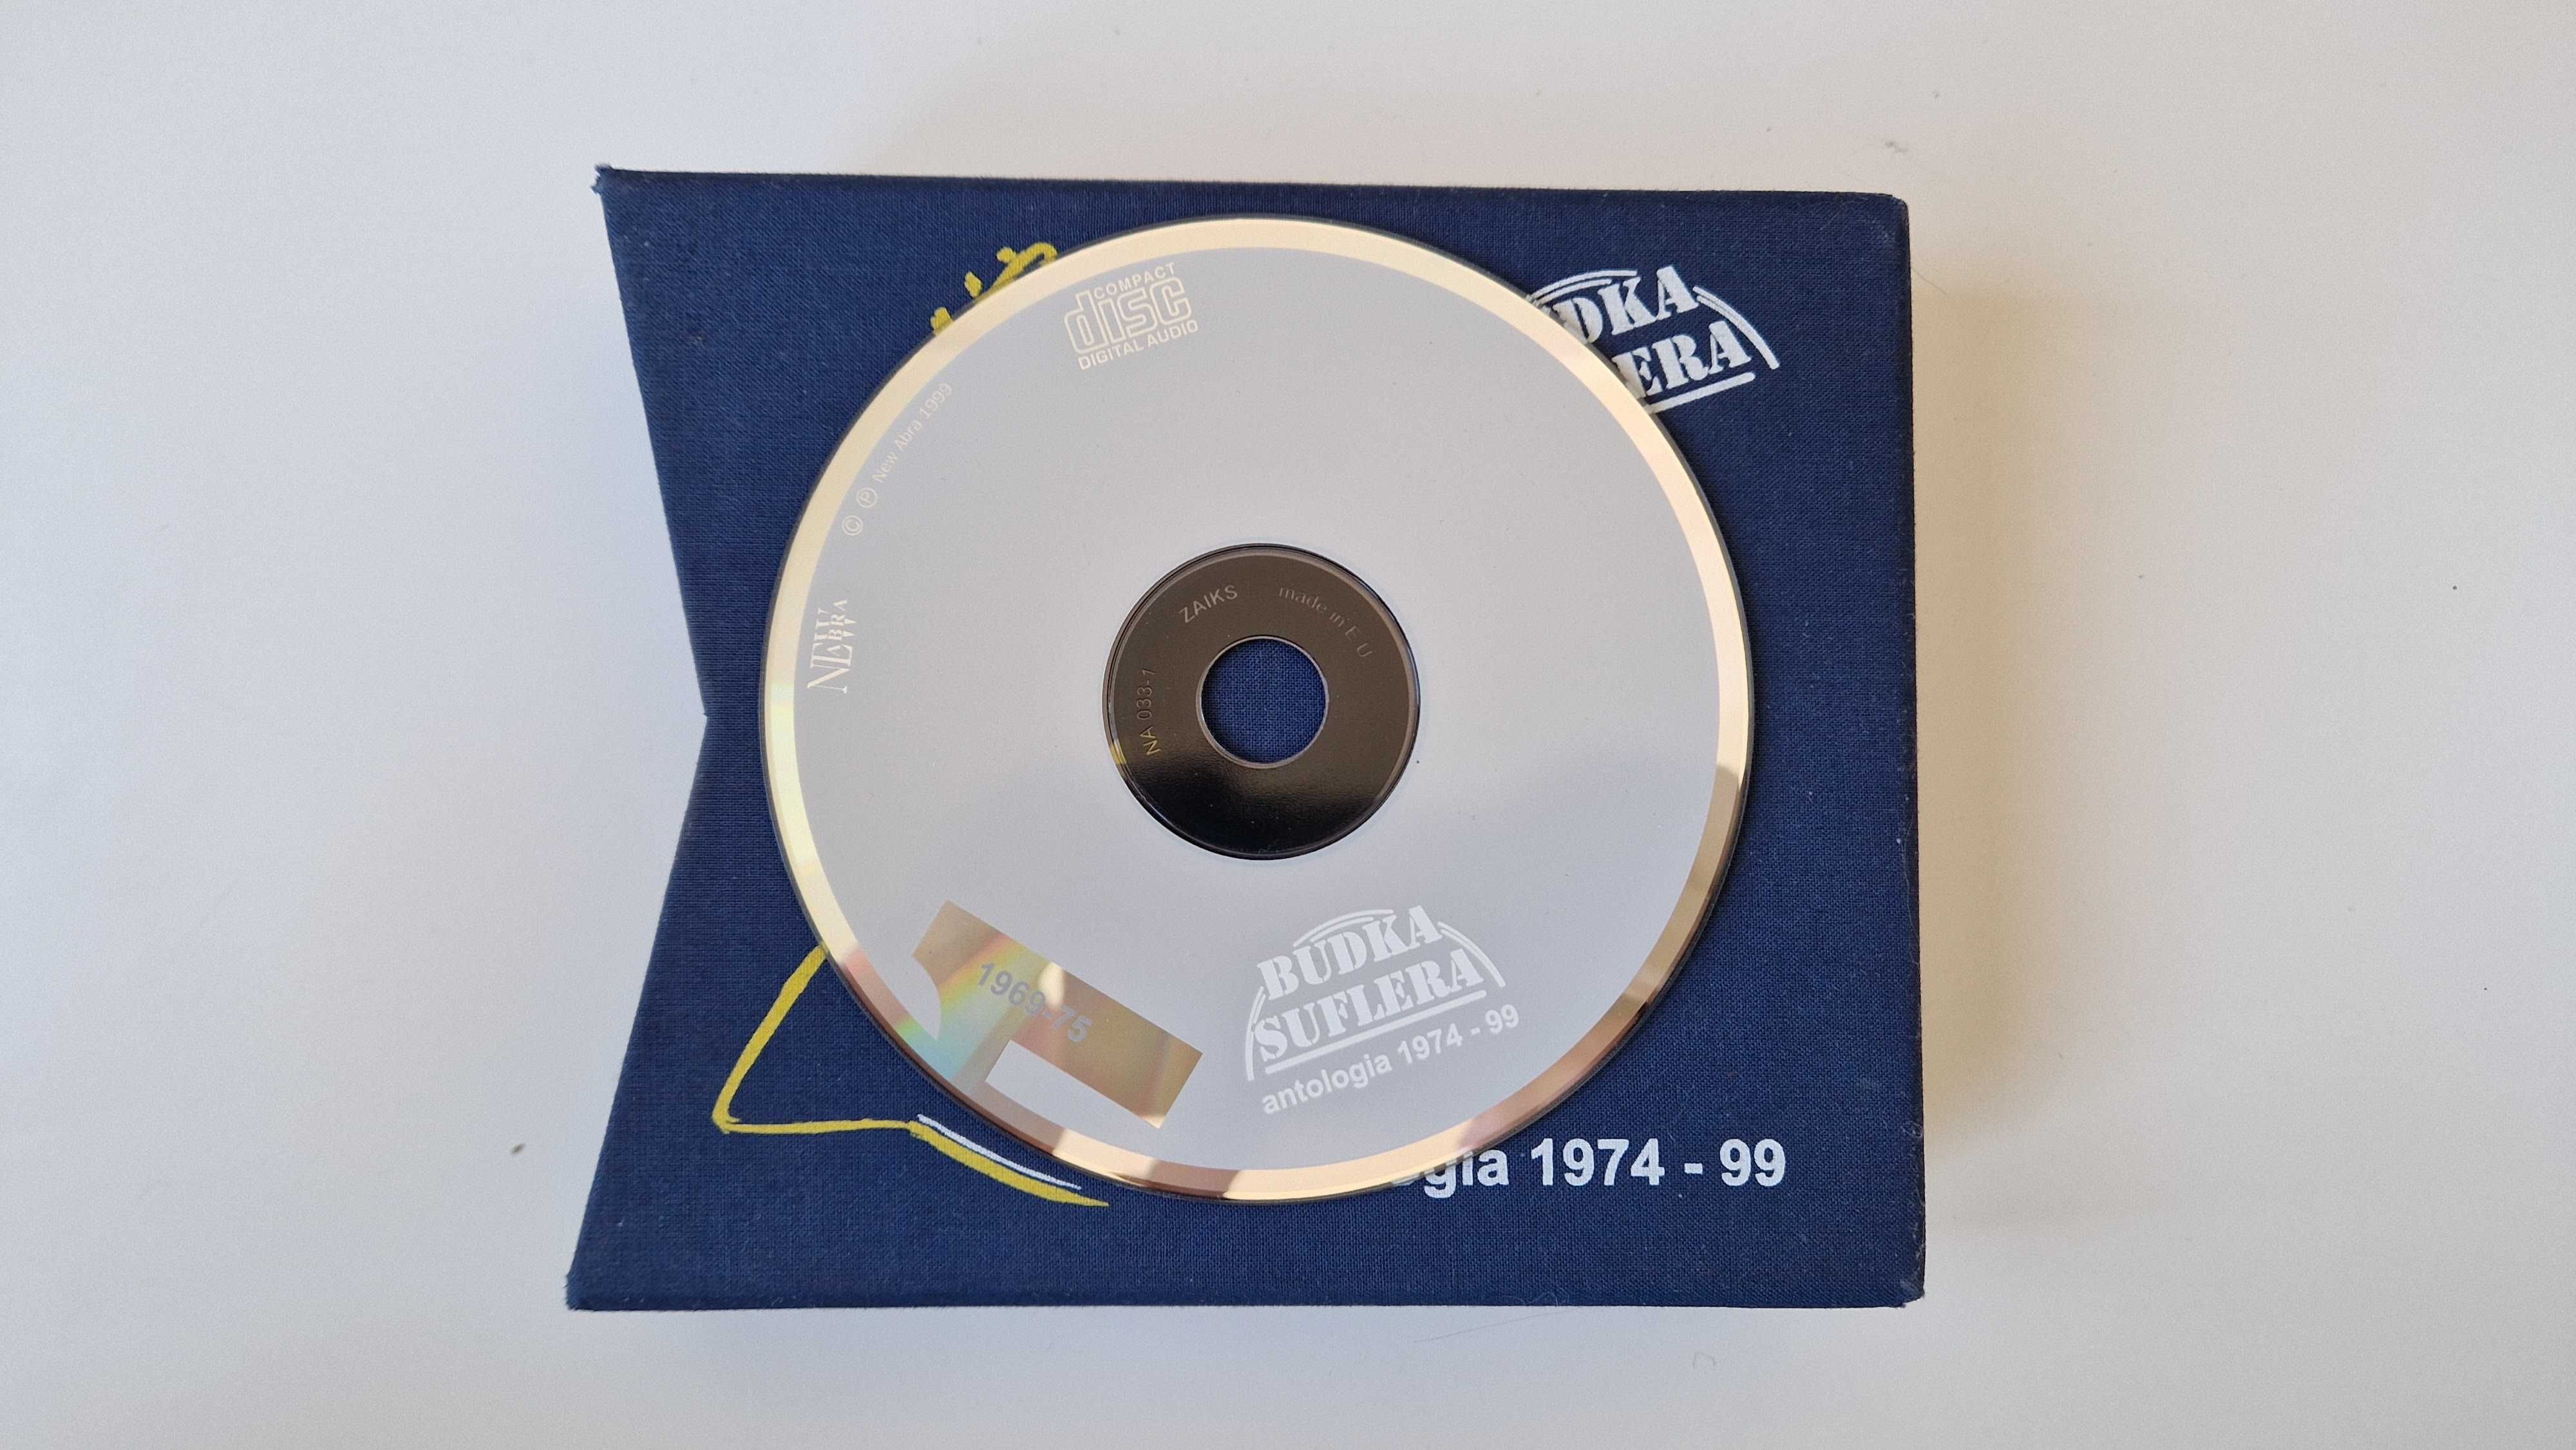 Budka suflera antologia 1974-99 - 10 CD